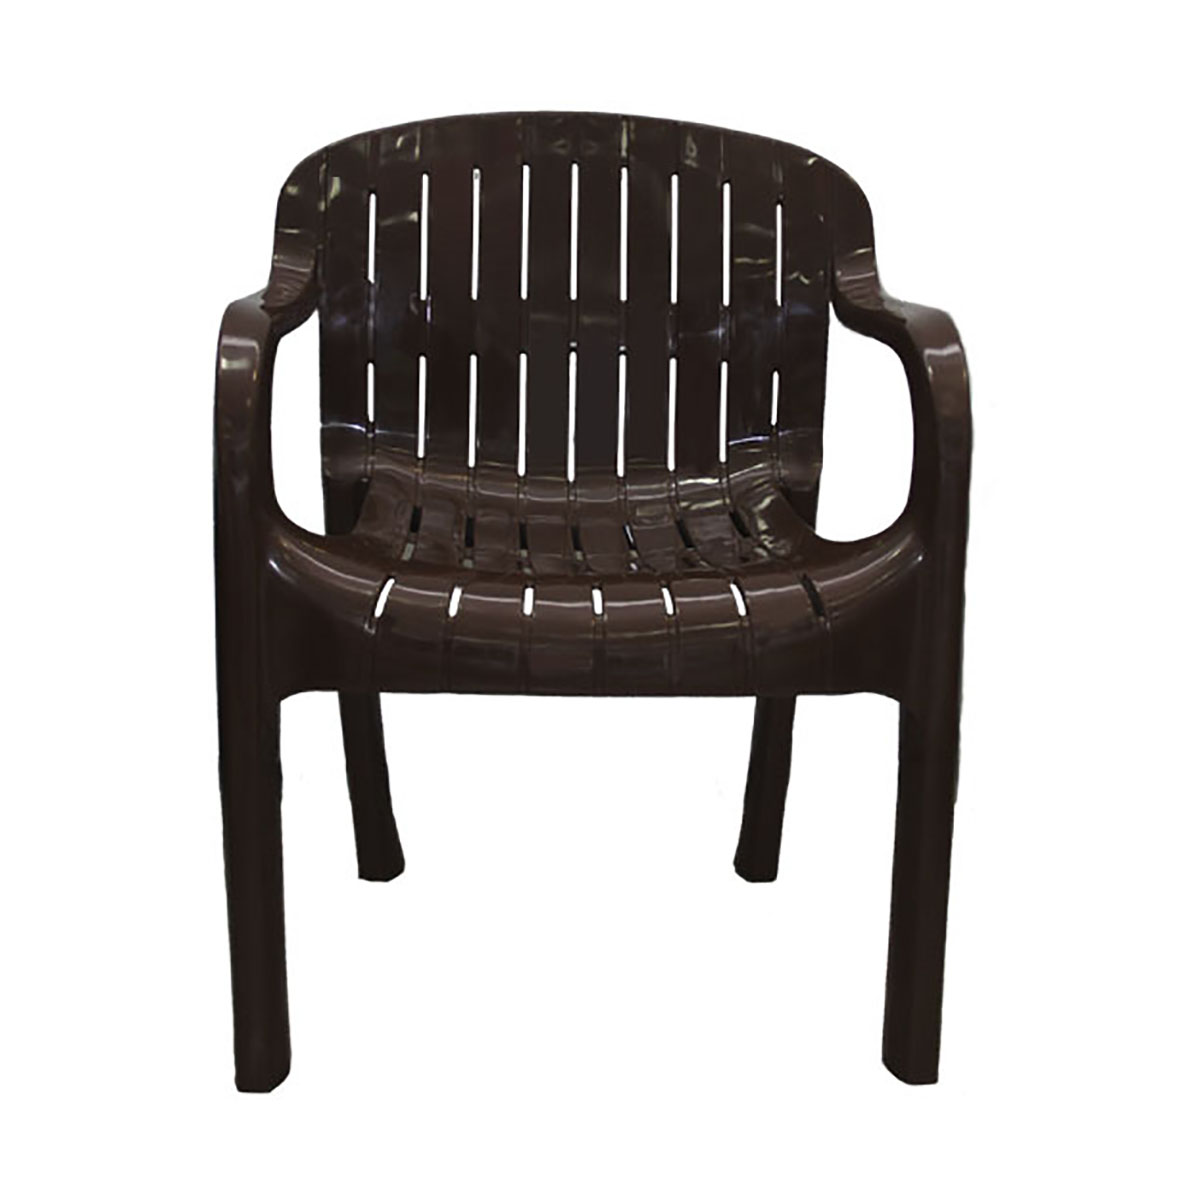 Садовое кресло Стандарт пластик Летнее 217482 48х61х81см шоколадный